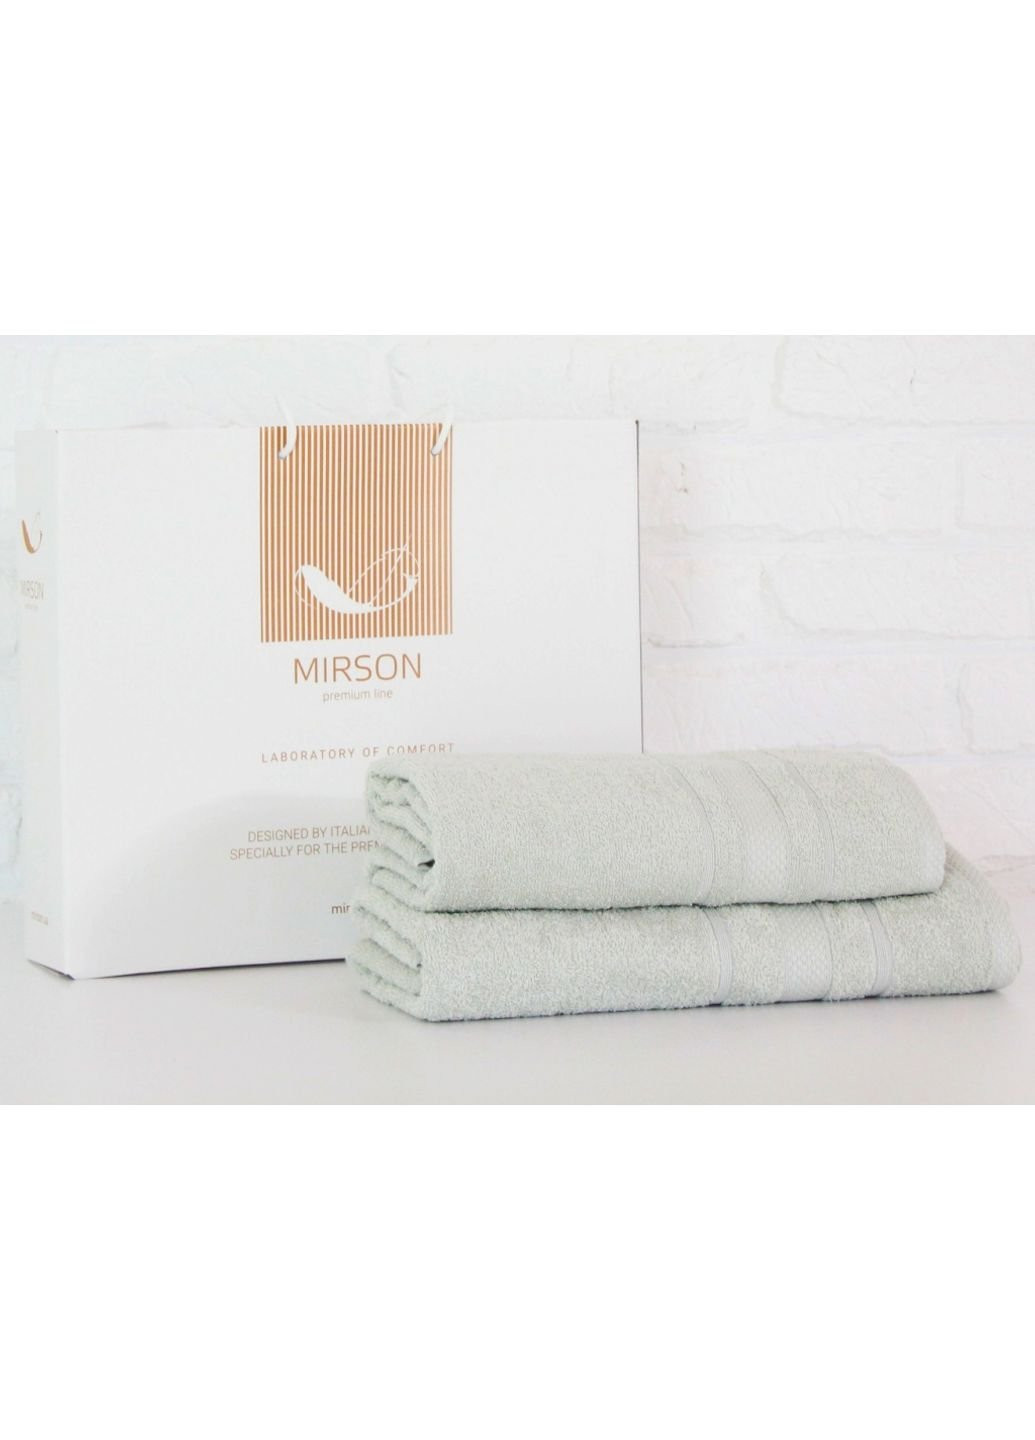 Mirson полотенце набор банных №5078 elite softness menthol 50х90, 70х140 (2200003183160) мятный производство - Украина